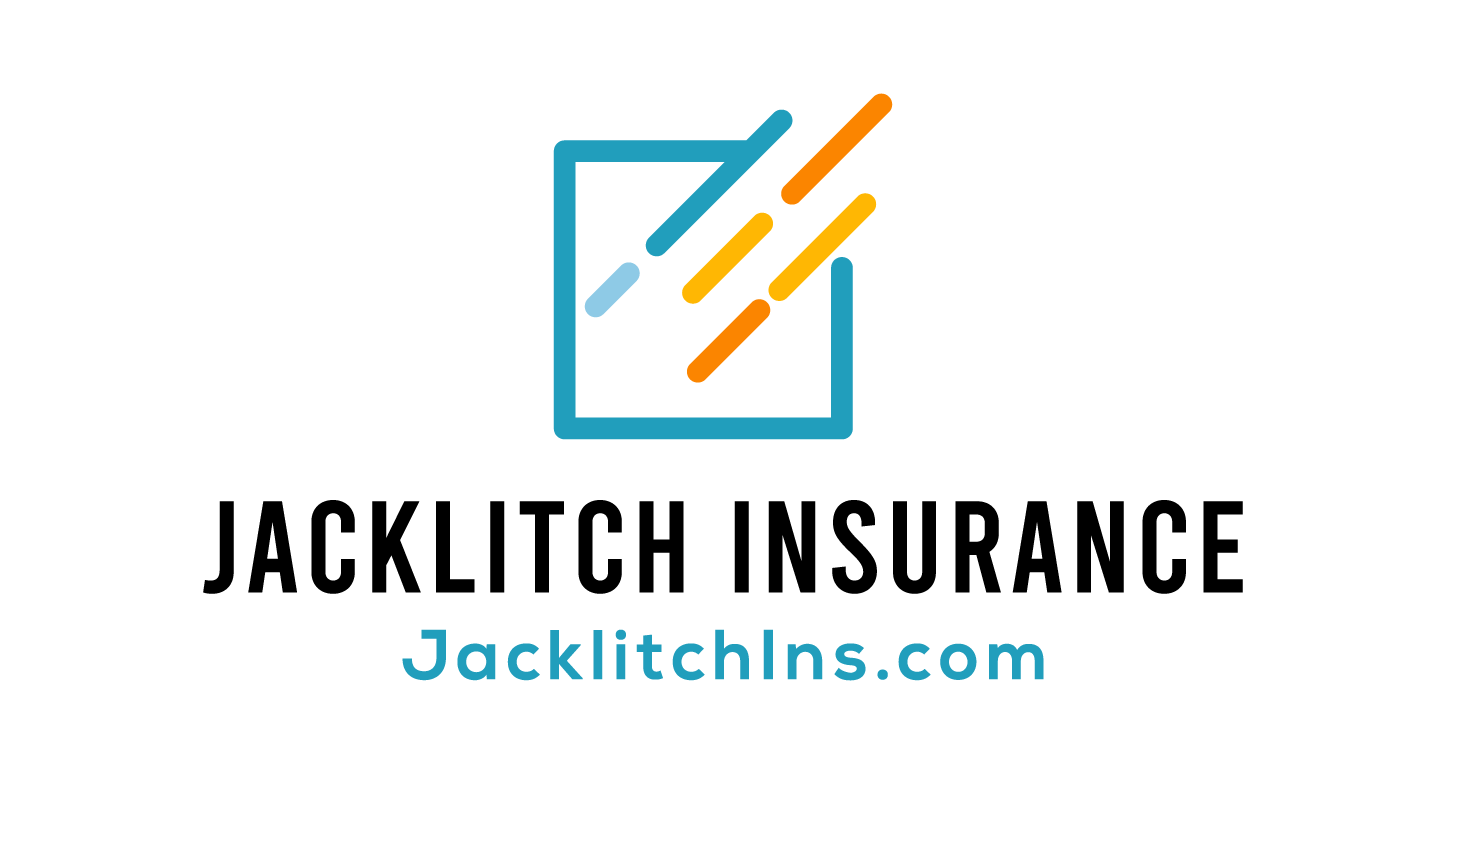 Jacklitch Insurance